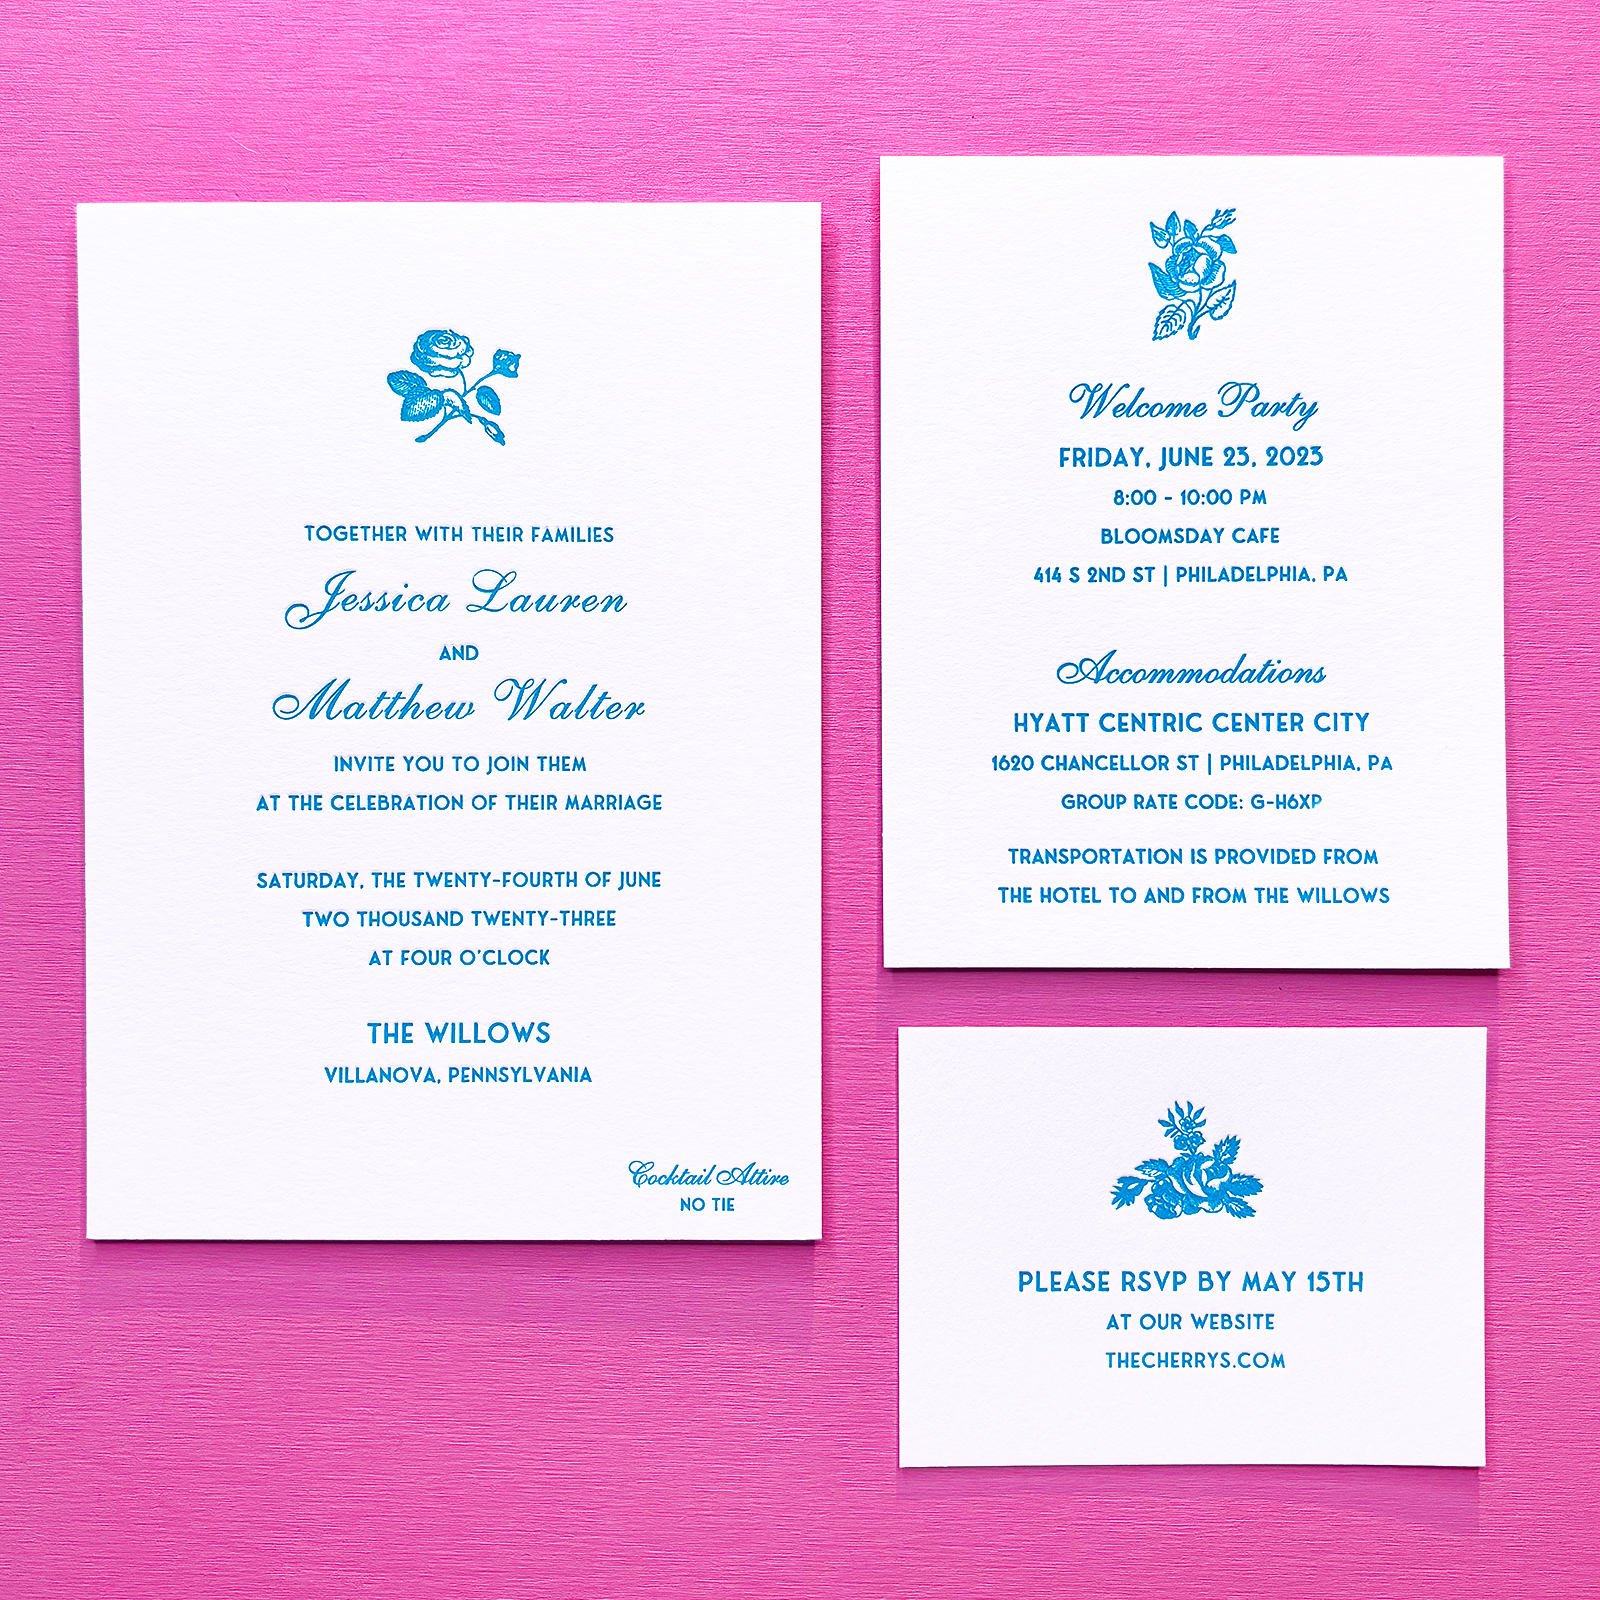 letterpress wedding invite New York City 